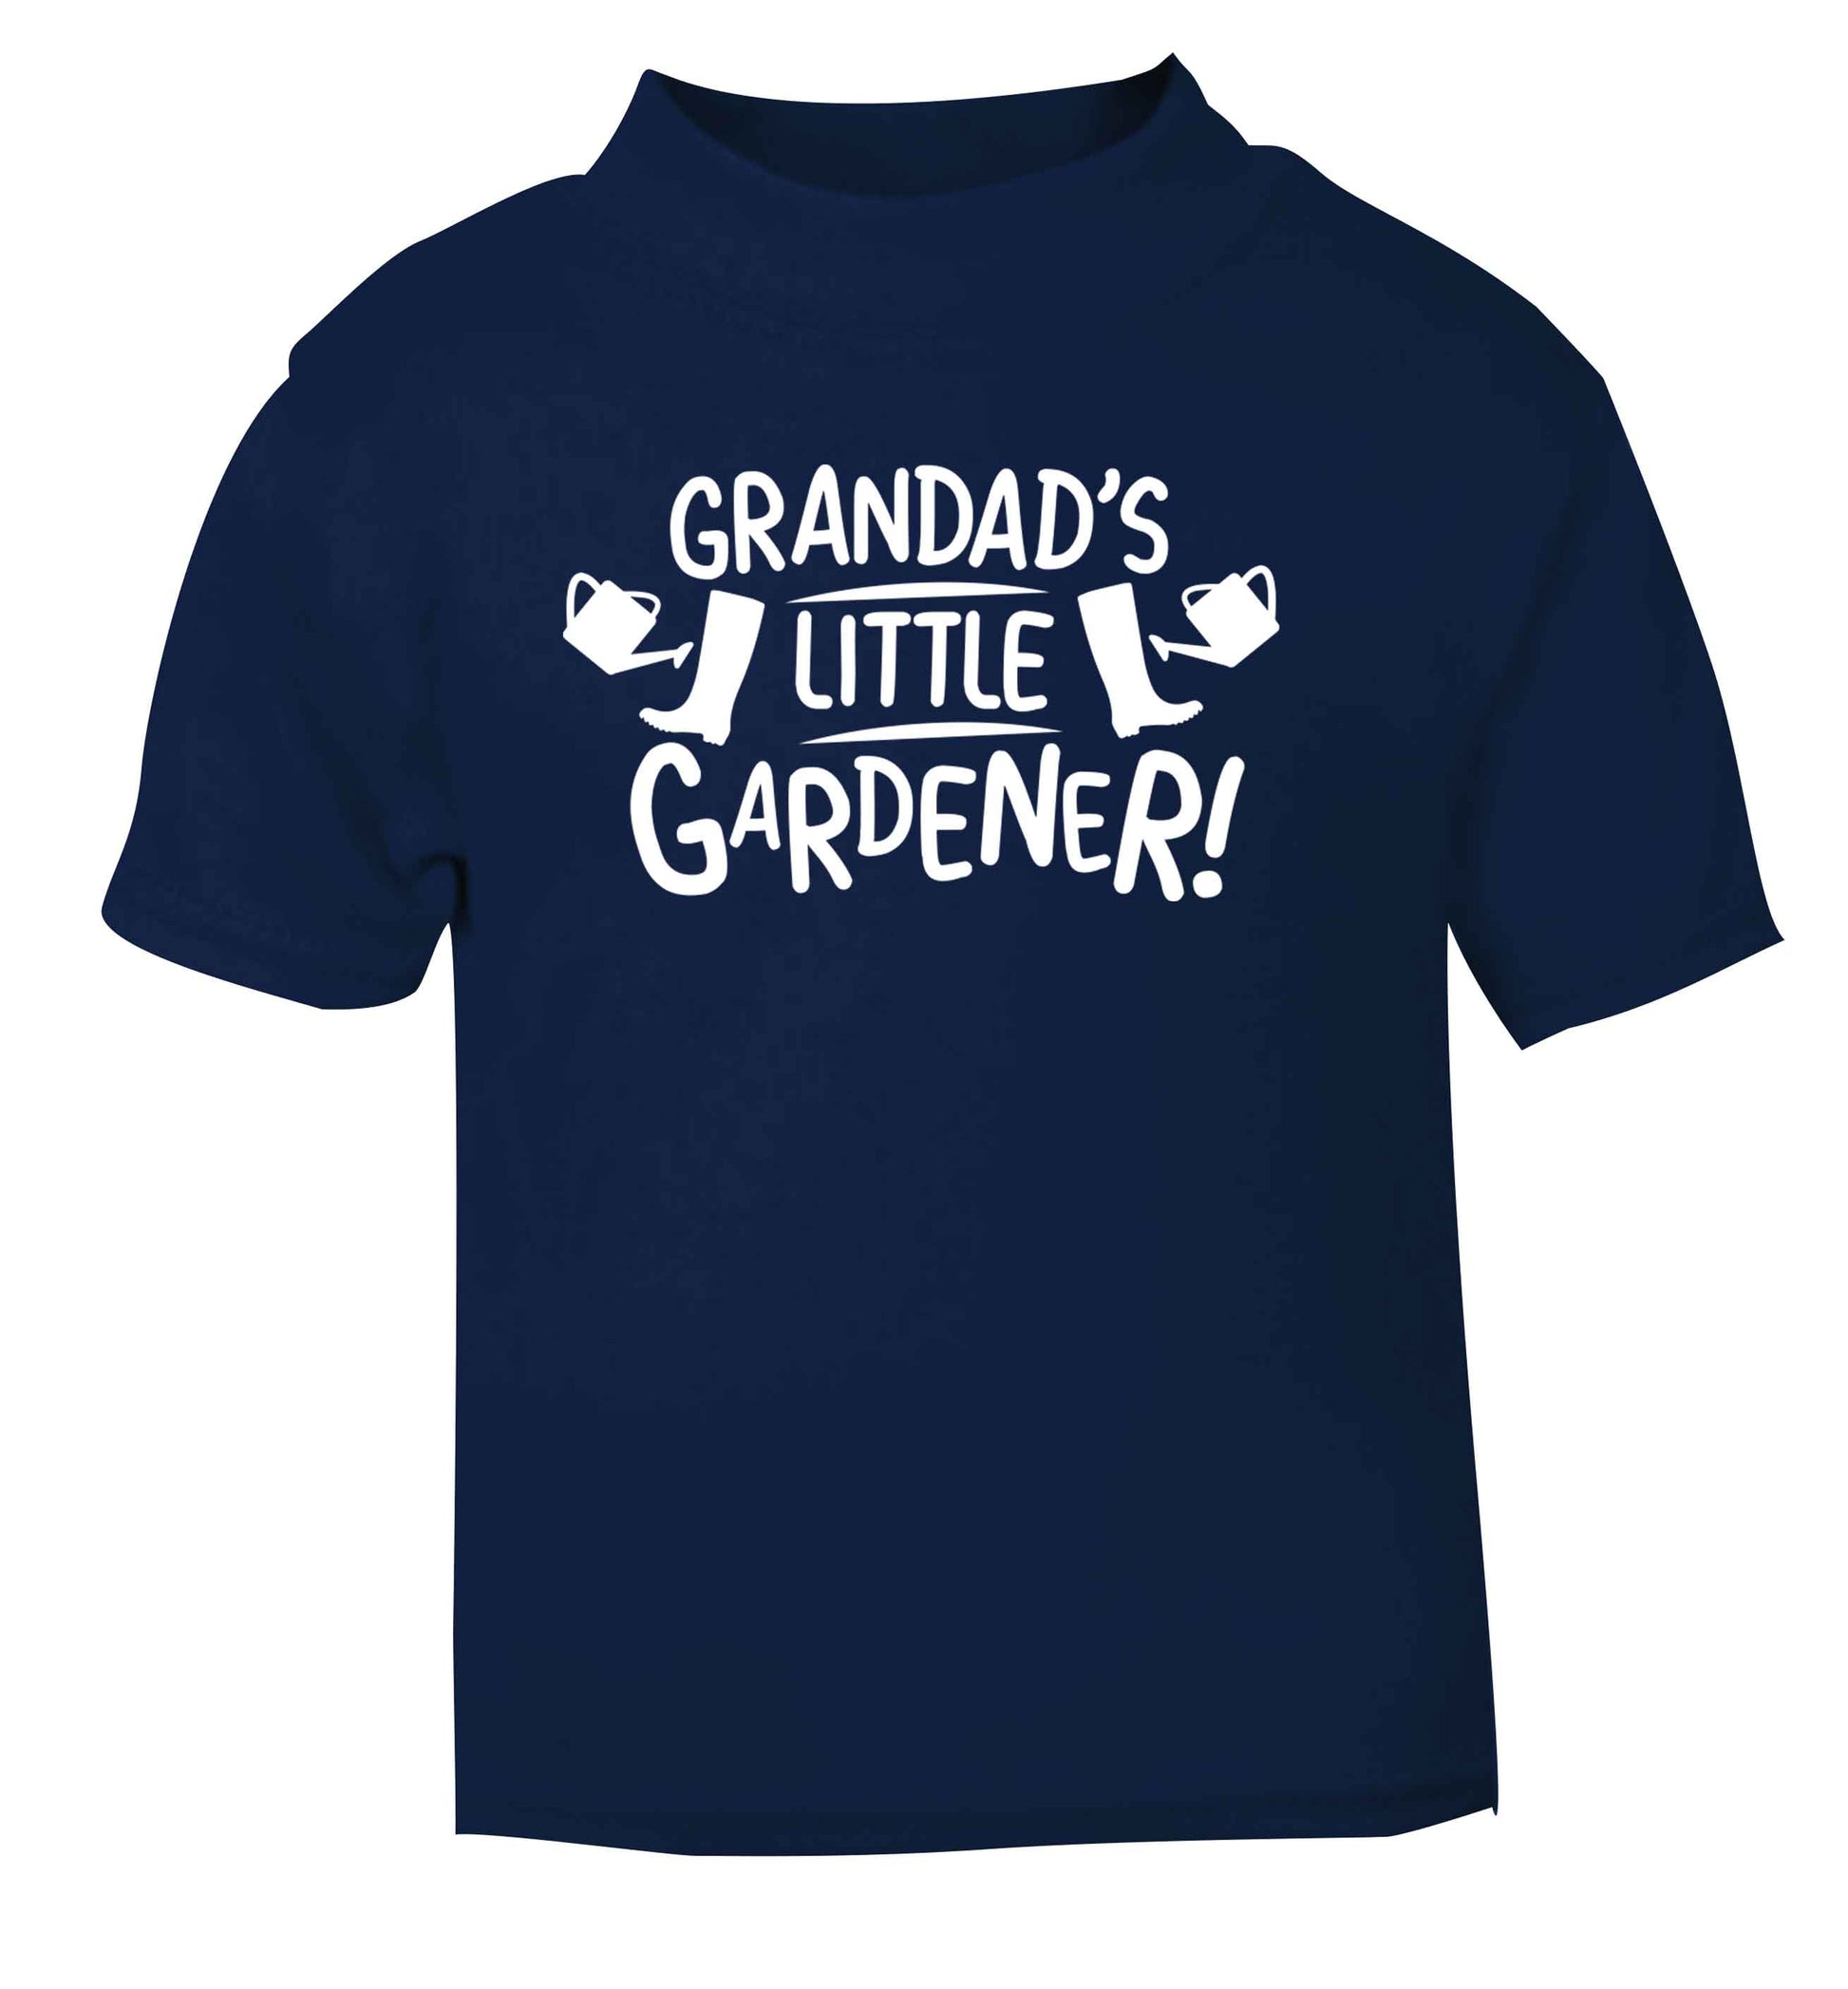 Grandad's little gardener navy Baby Toddler Tshirt 2 Years